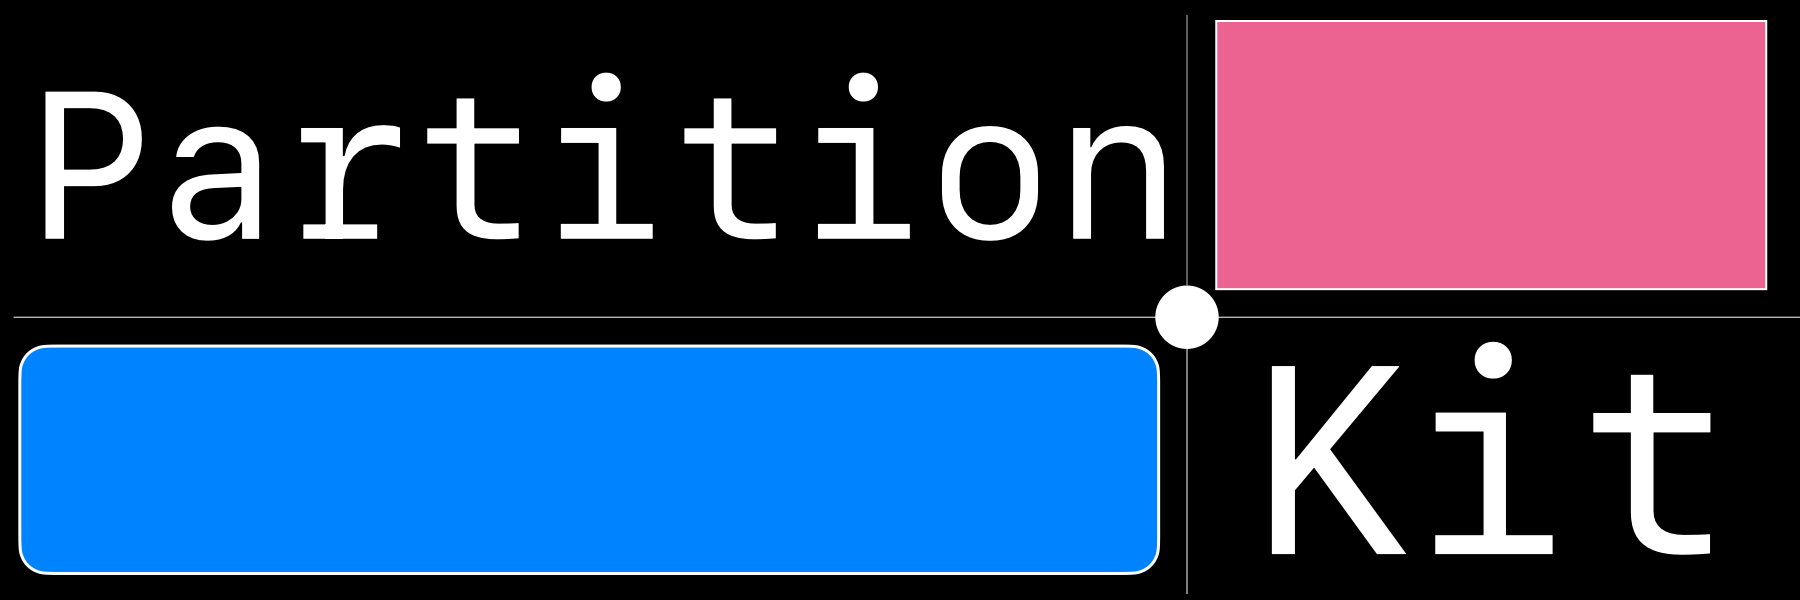 partition kit logo